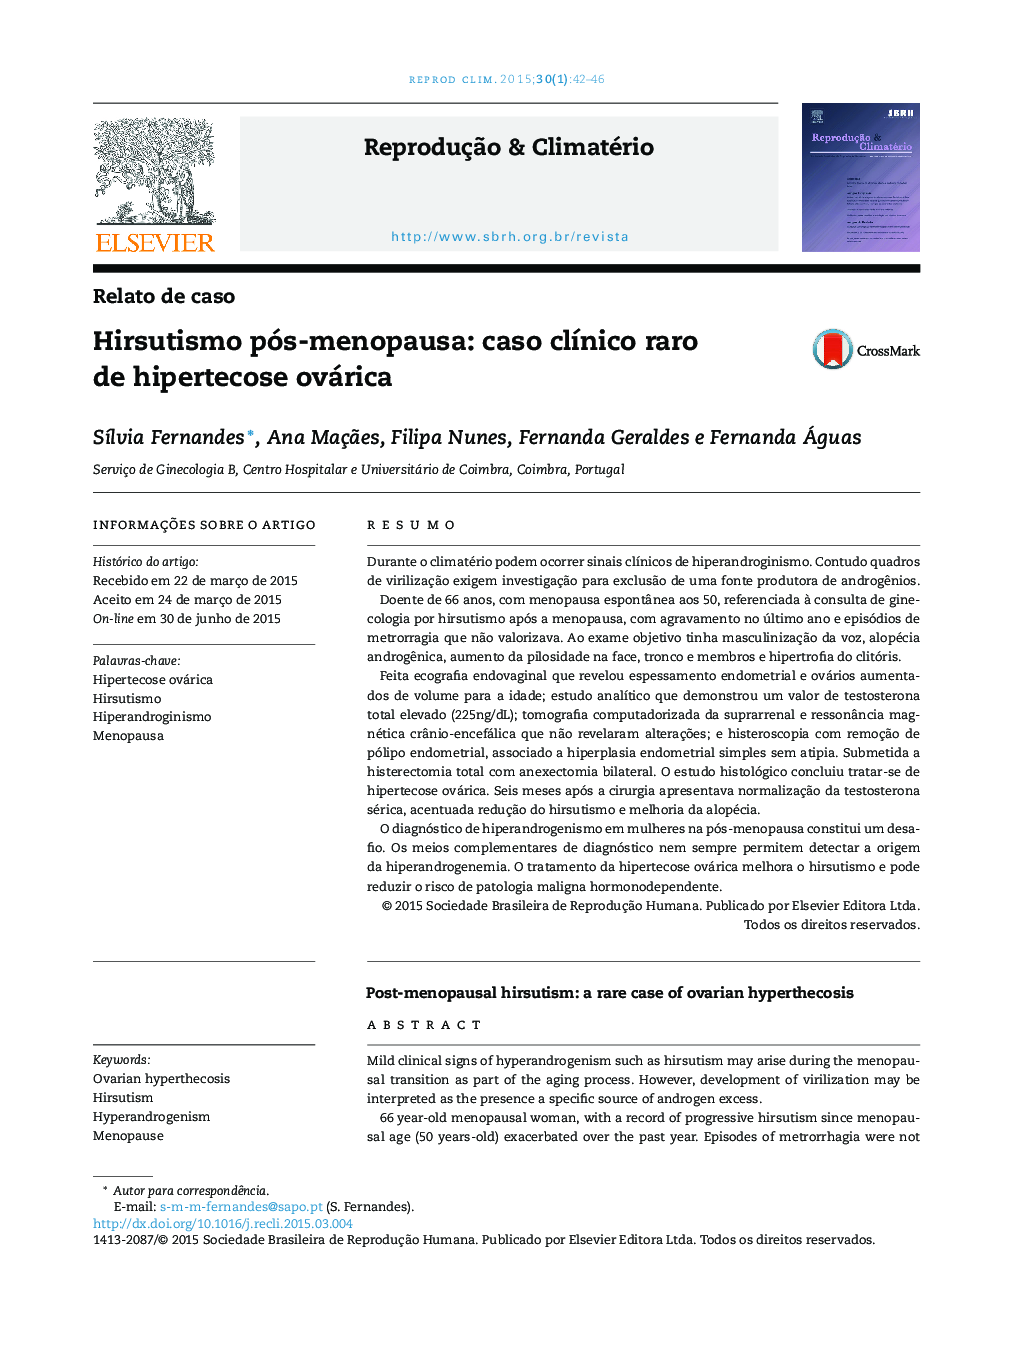 Hirsutismo pós‐menopausa: caso clínico raro de hipertecose ovárica